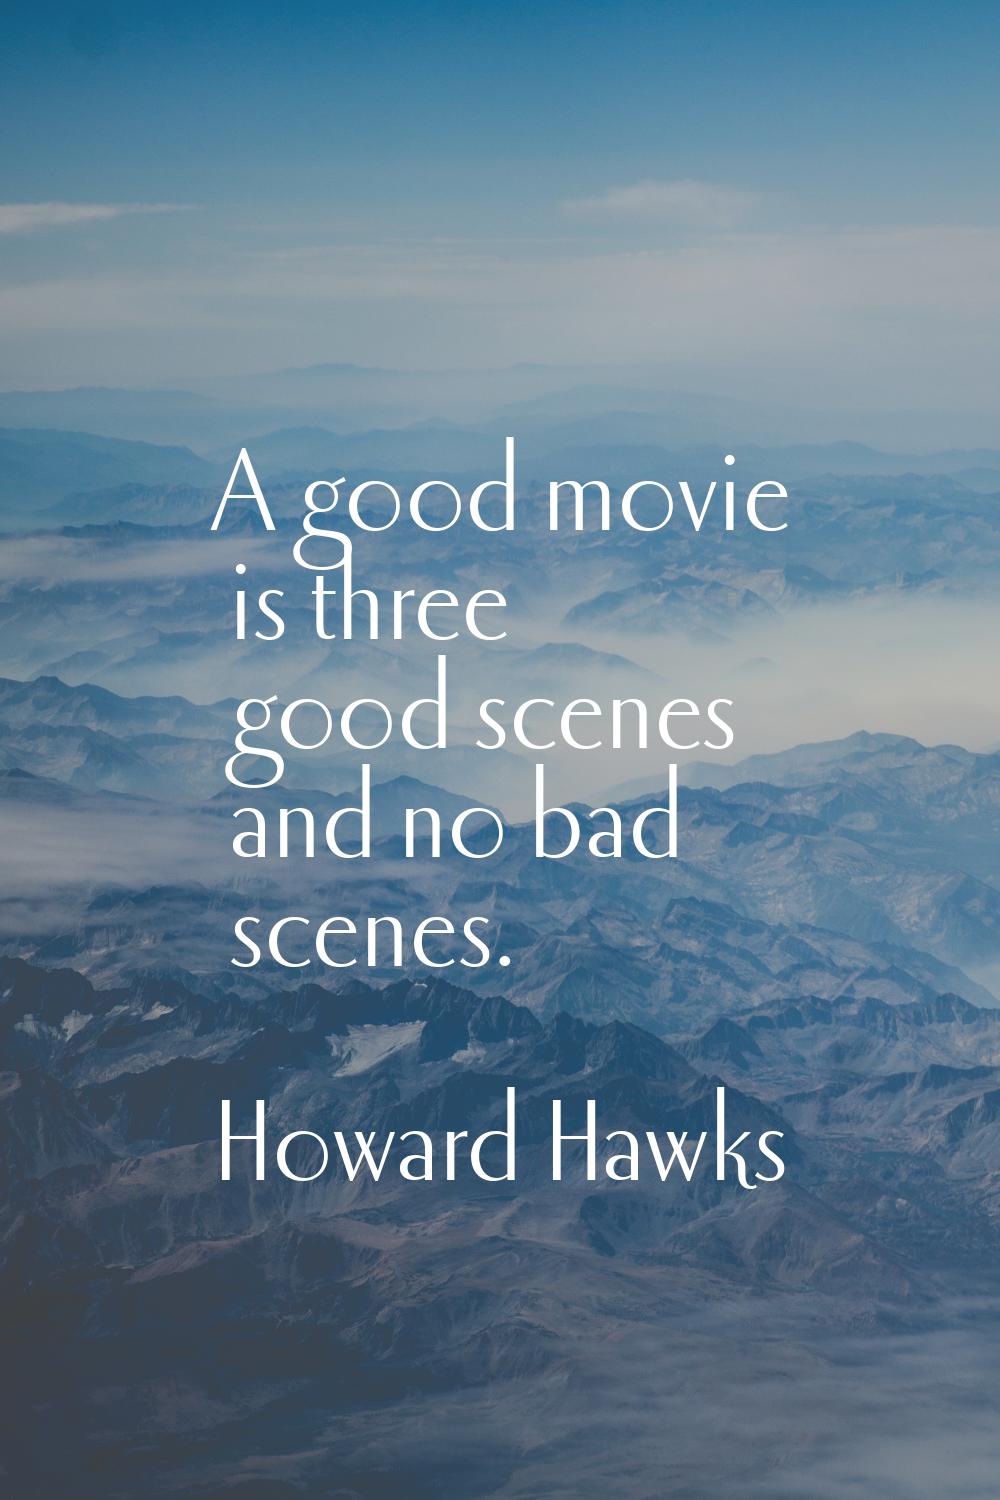 A good movie is three good scenes and no bad scenes.